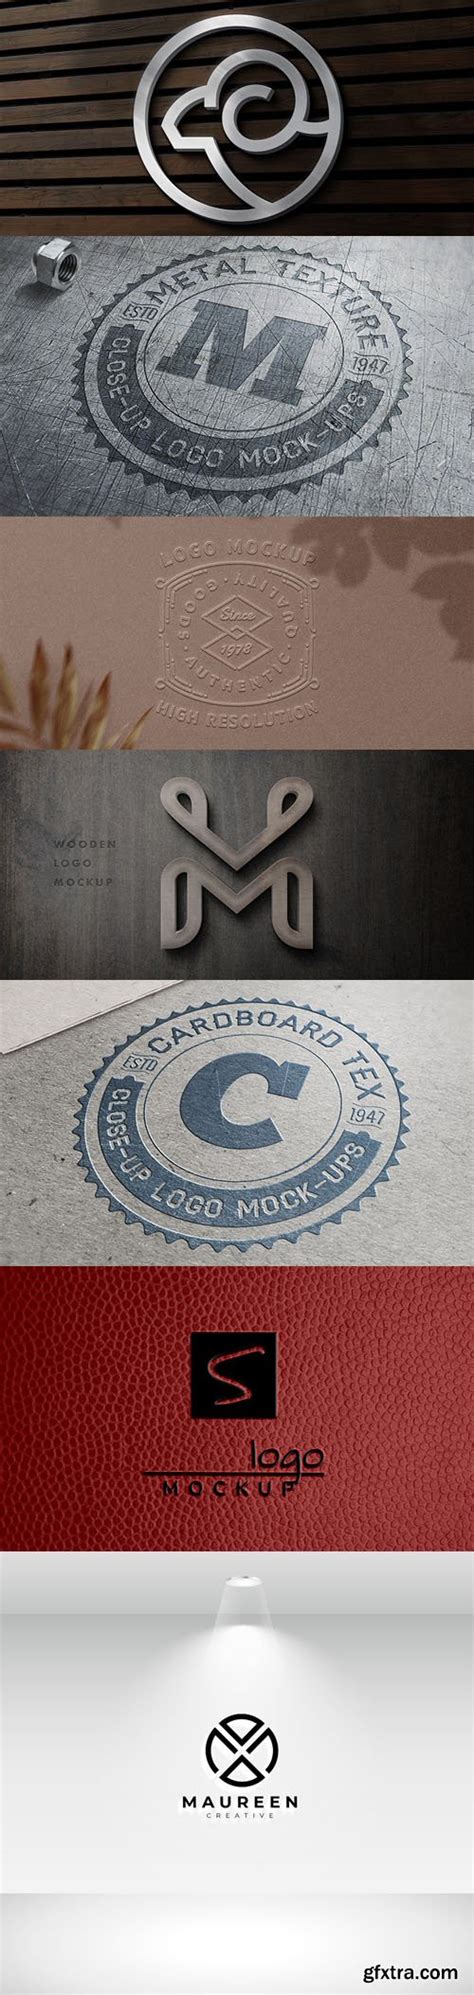 Awesome 9 Branding Logo Psd Mockups Templates Gfxtra